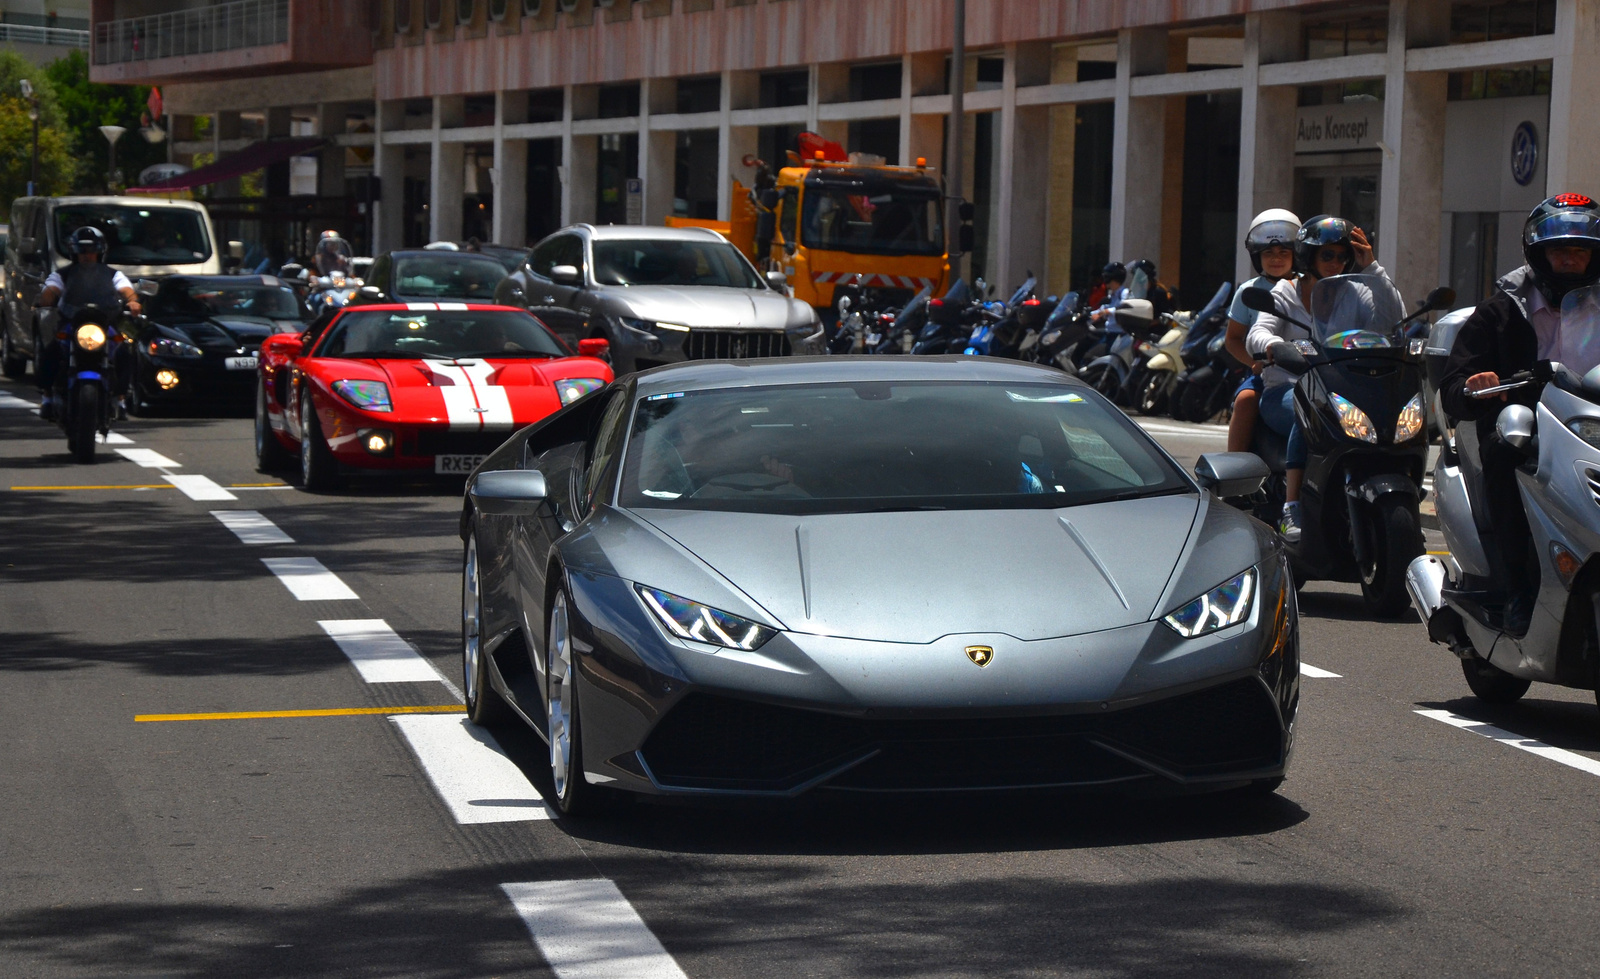 Monaco traffic